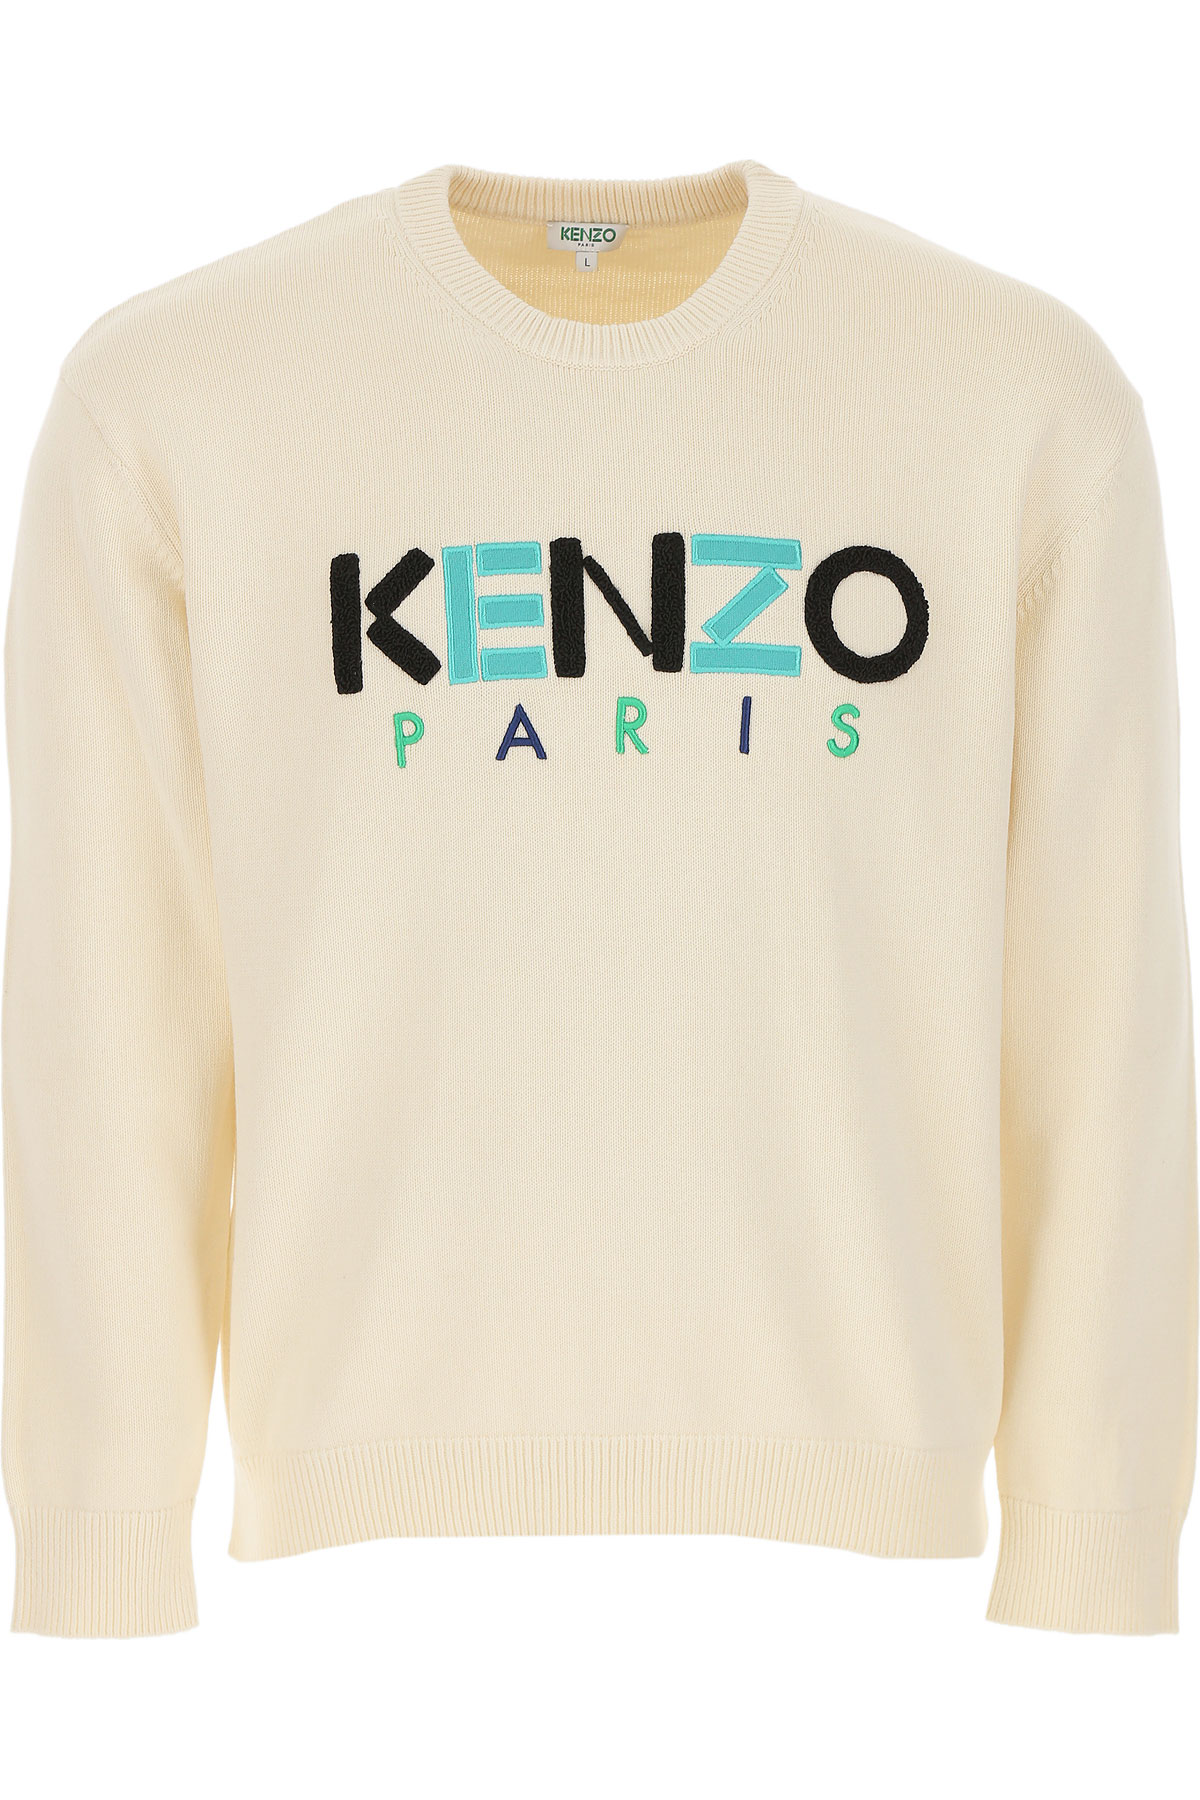 Mens Clothing Kenzo, Style code: 5pu217 